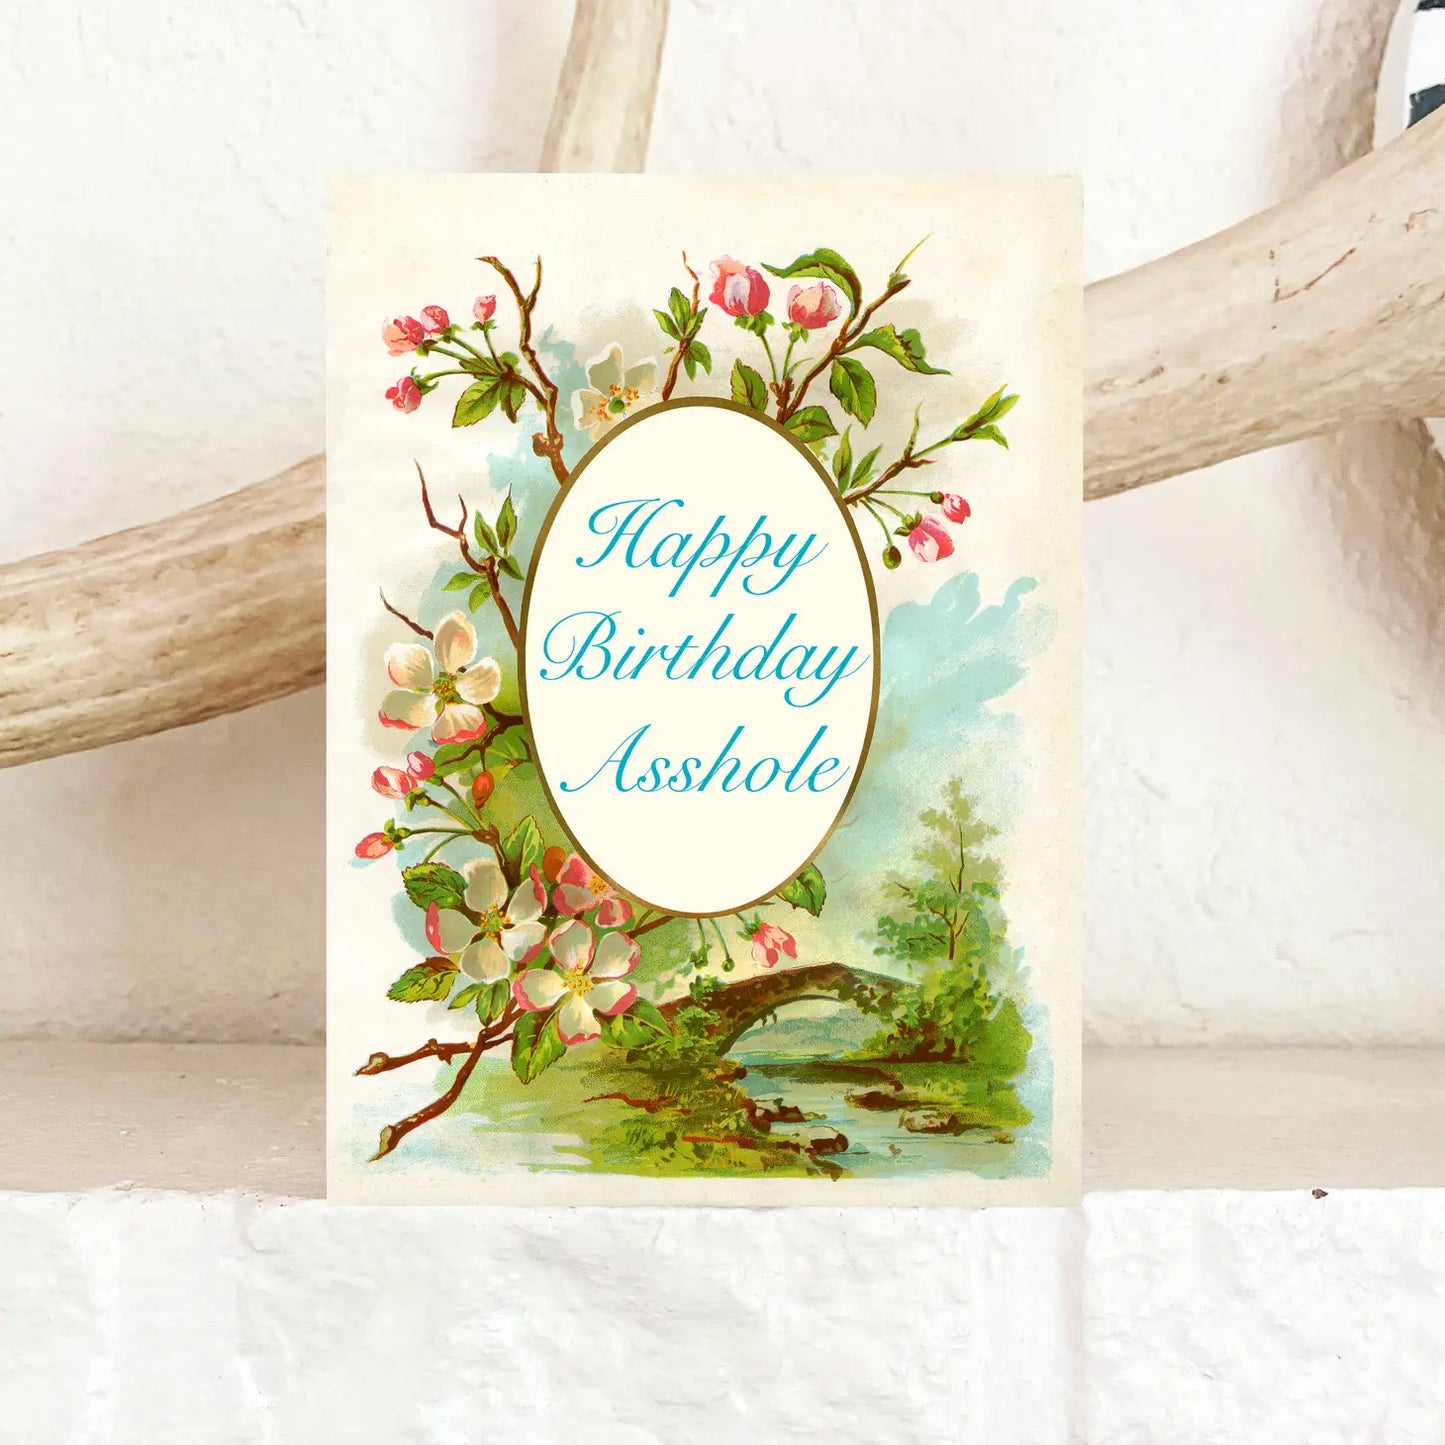 Happy Birthday Asshole Greeting Card